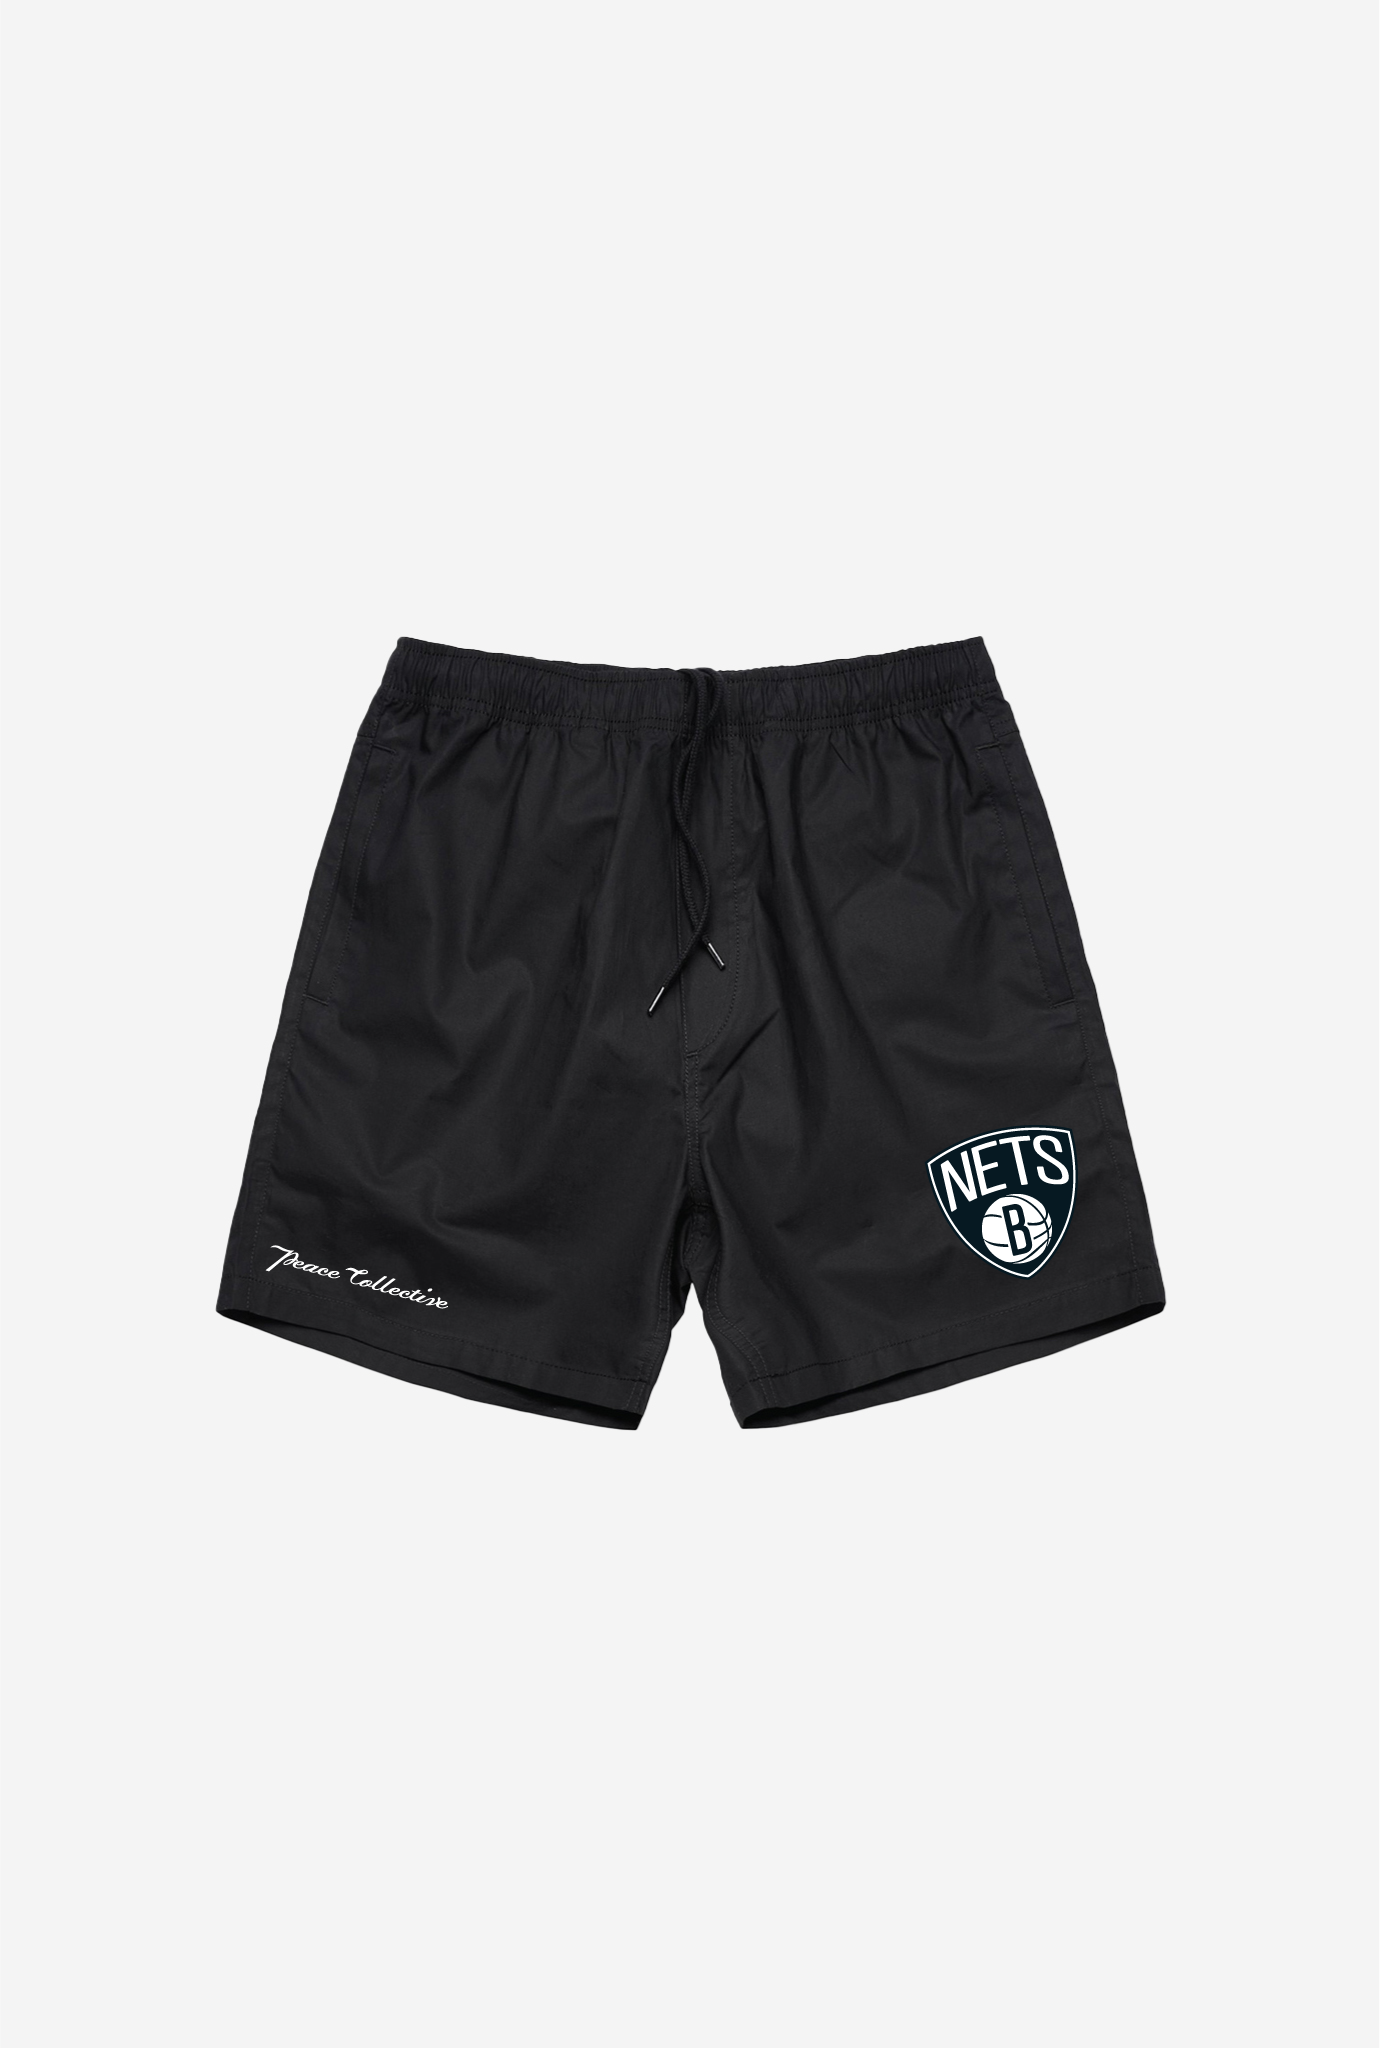 Brooklyn Nets Shorts - Black